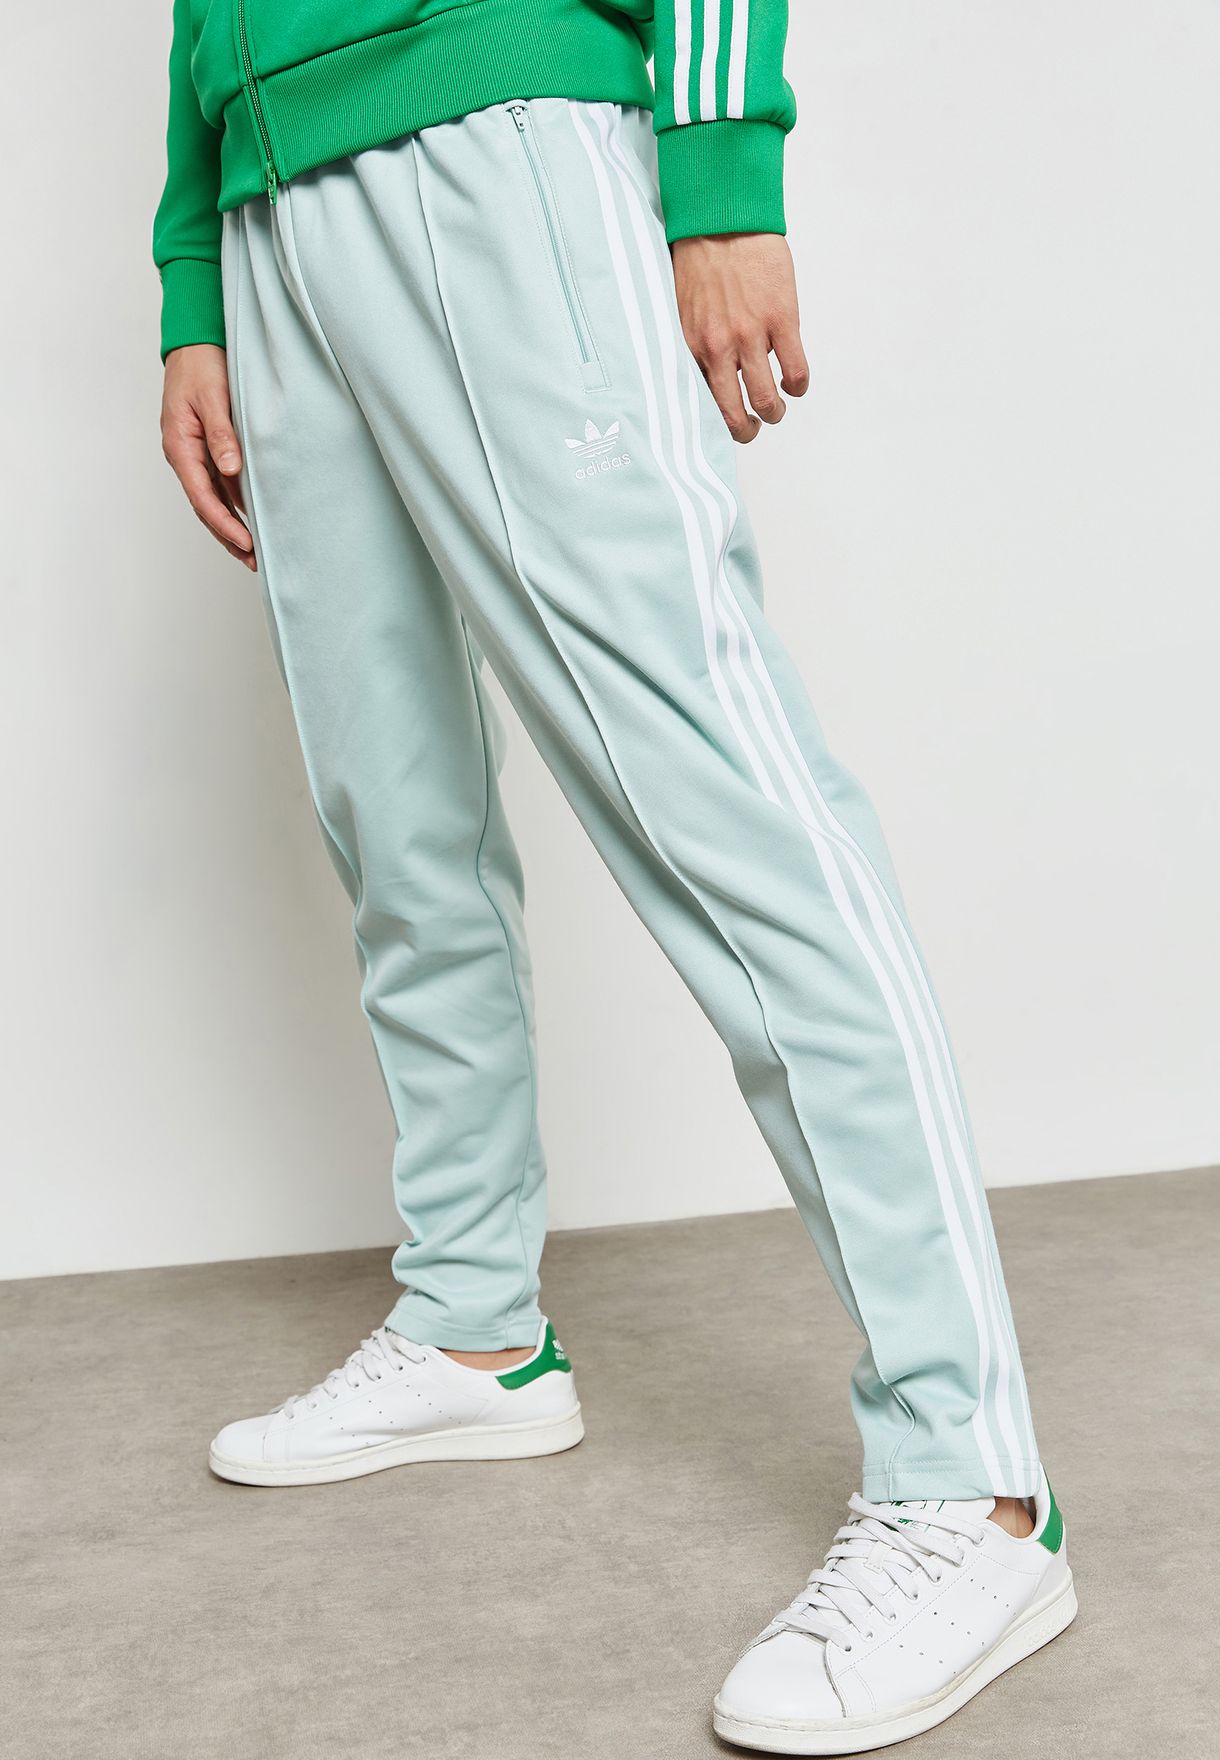 mint green adidas pants